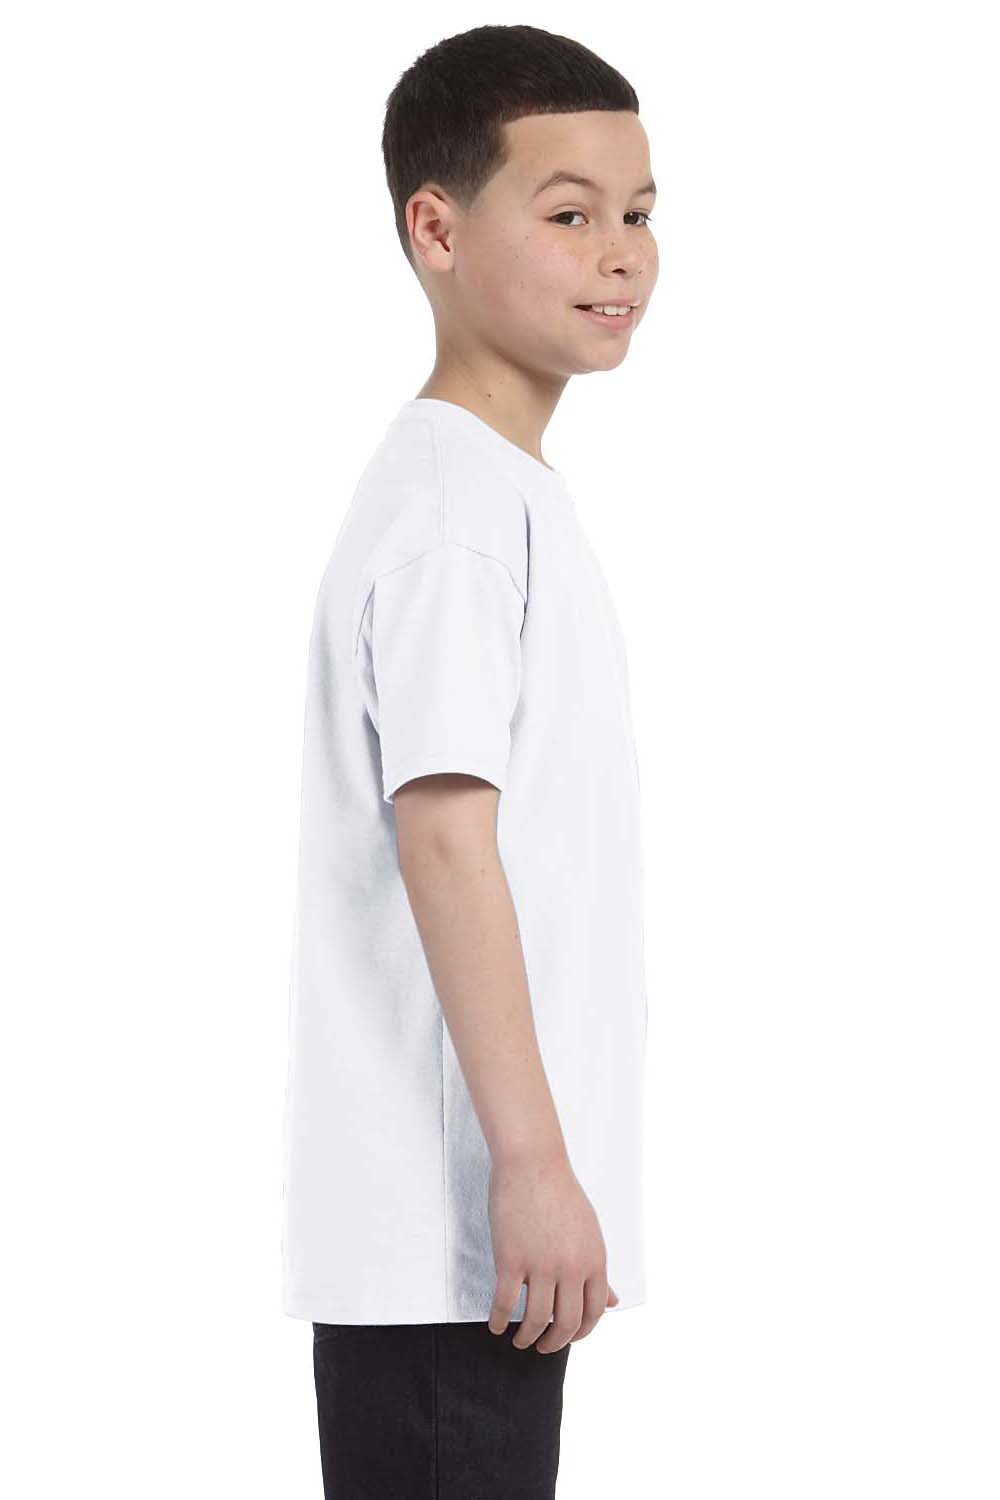 Jerzees 29B Youth Dri-Power Moisture Wicking Short Sleeve Crewneck T-Shirt White Side